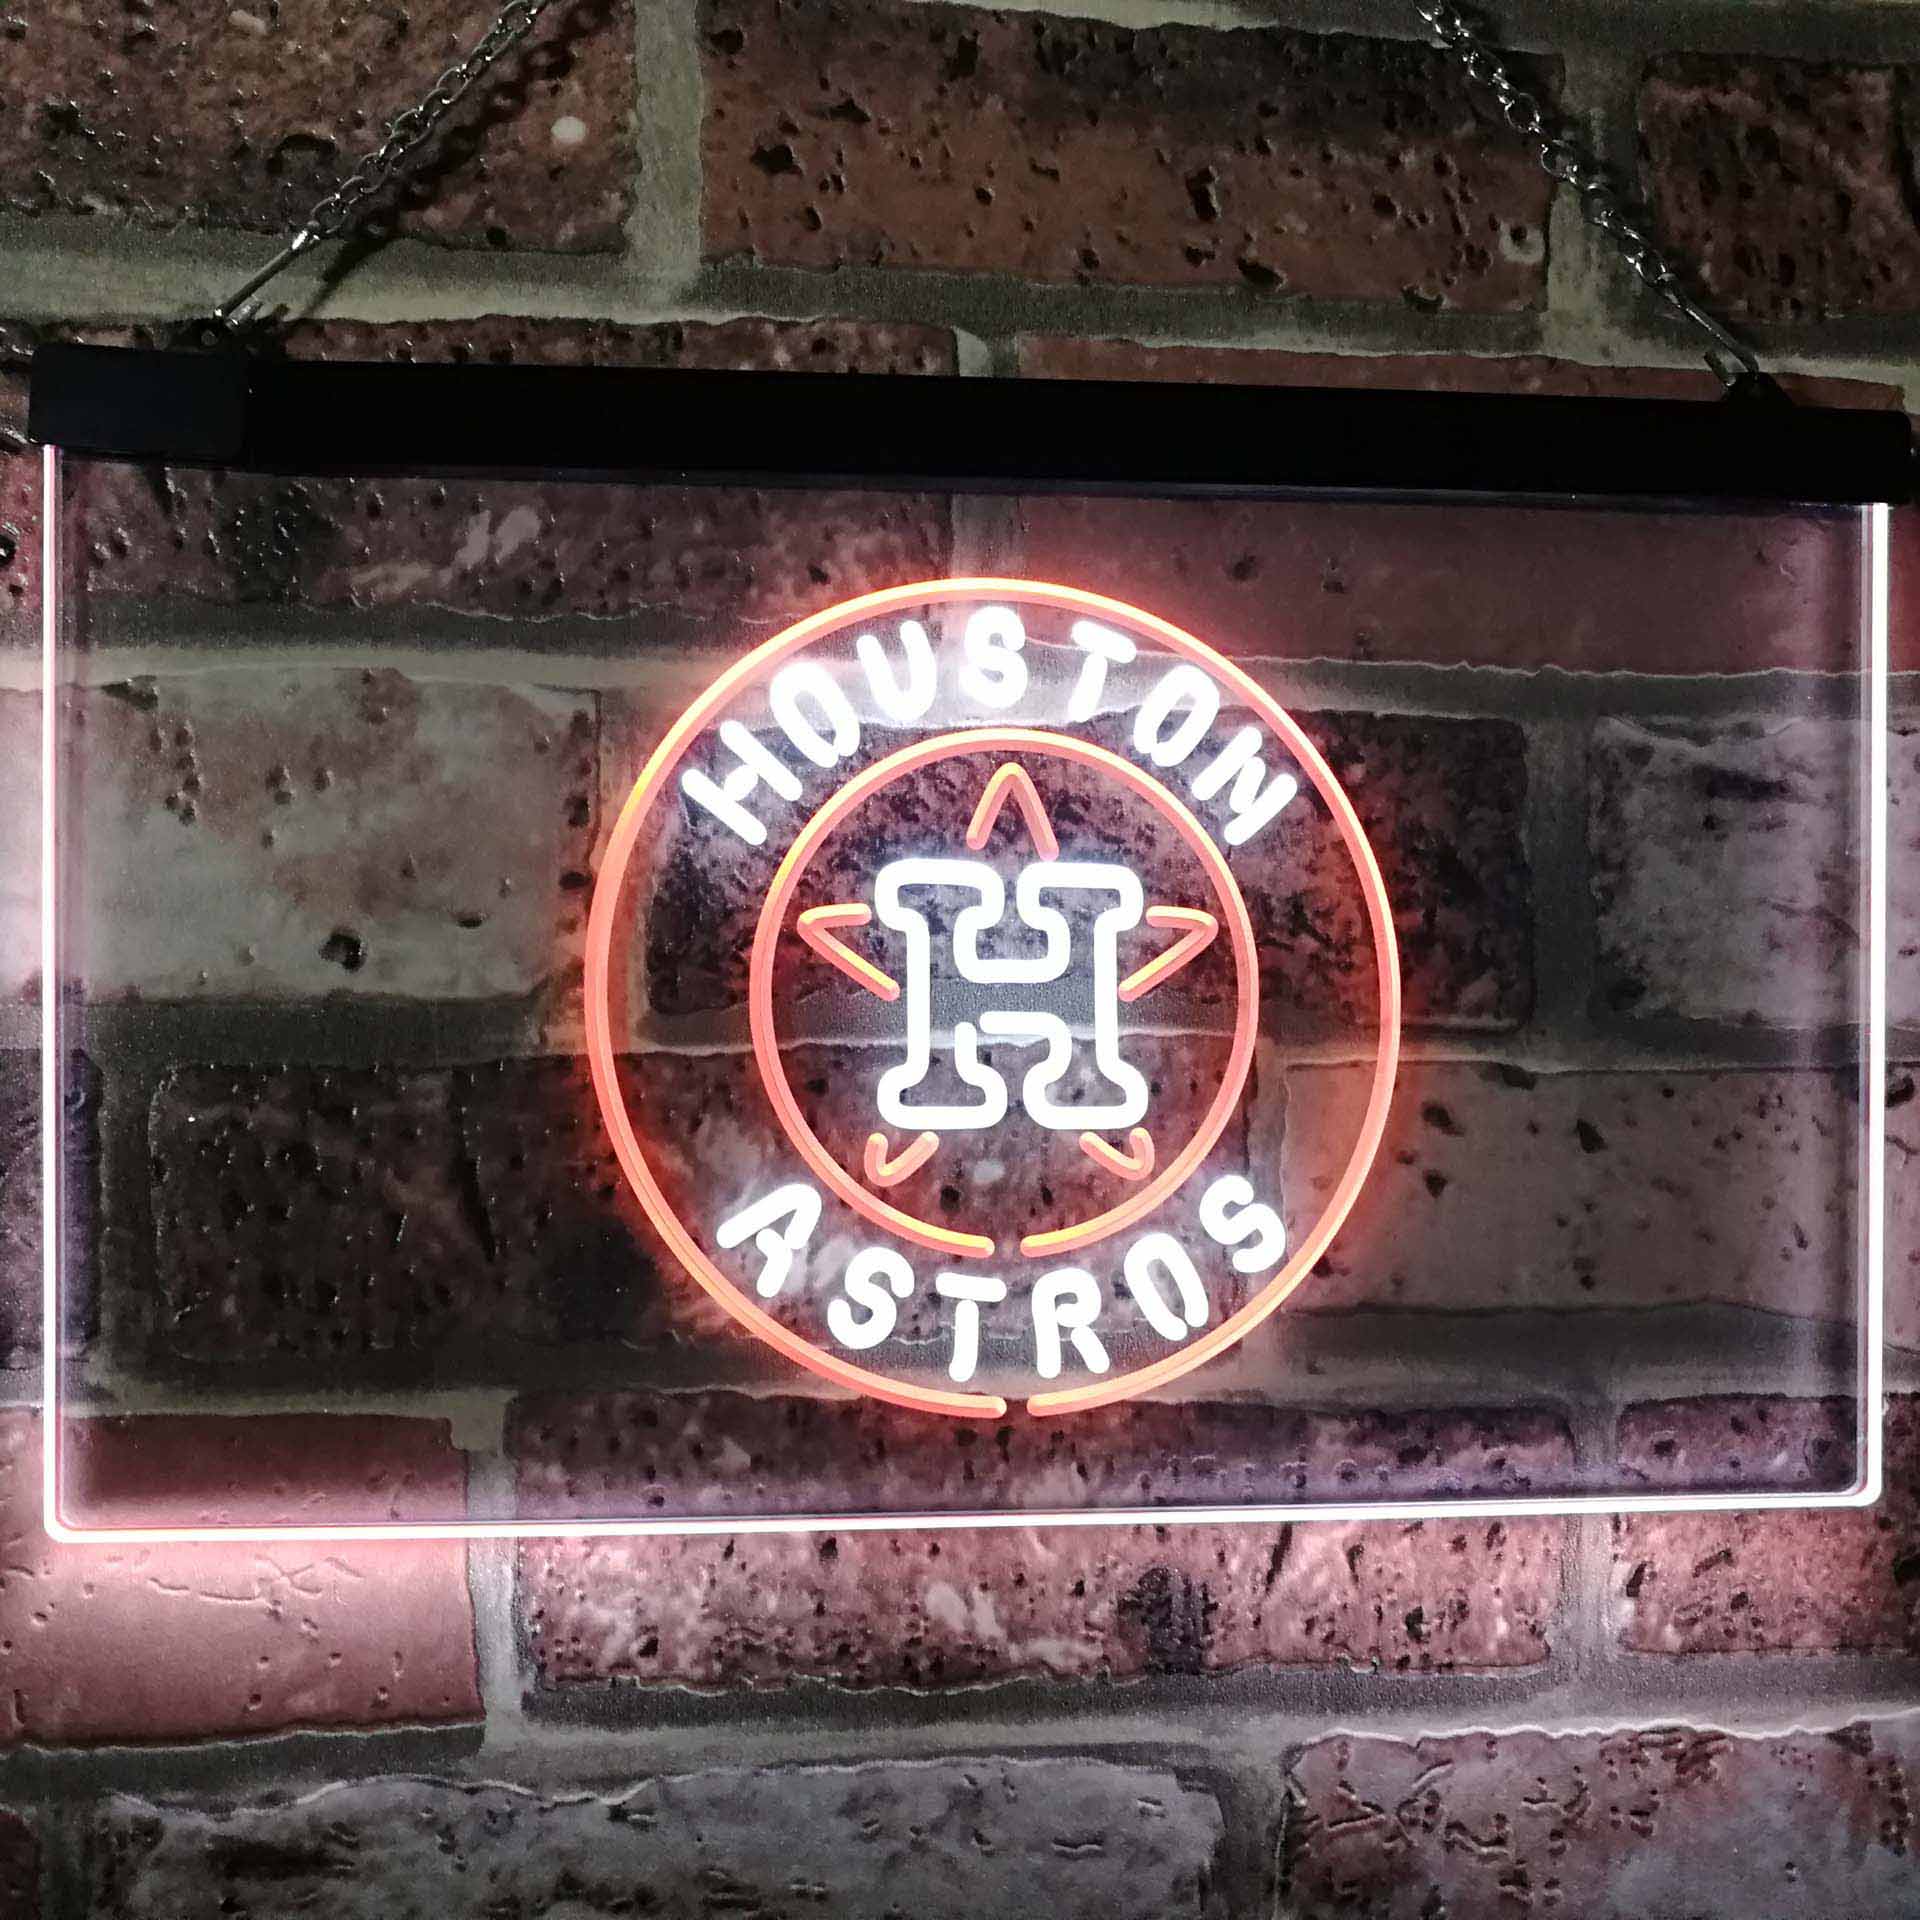 Houston Astros Man Cave Neon Sign